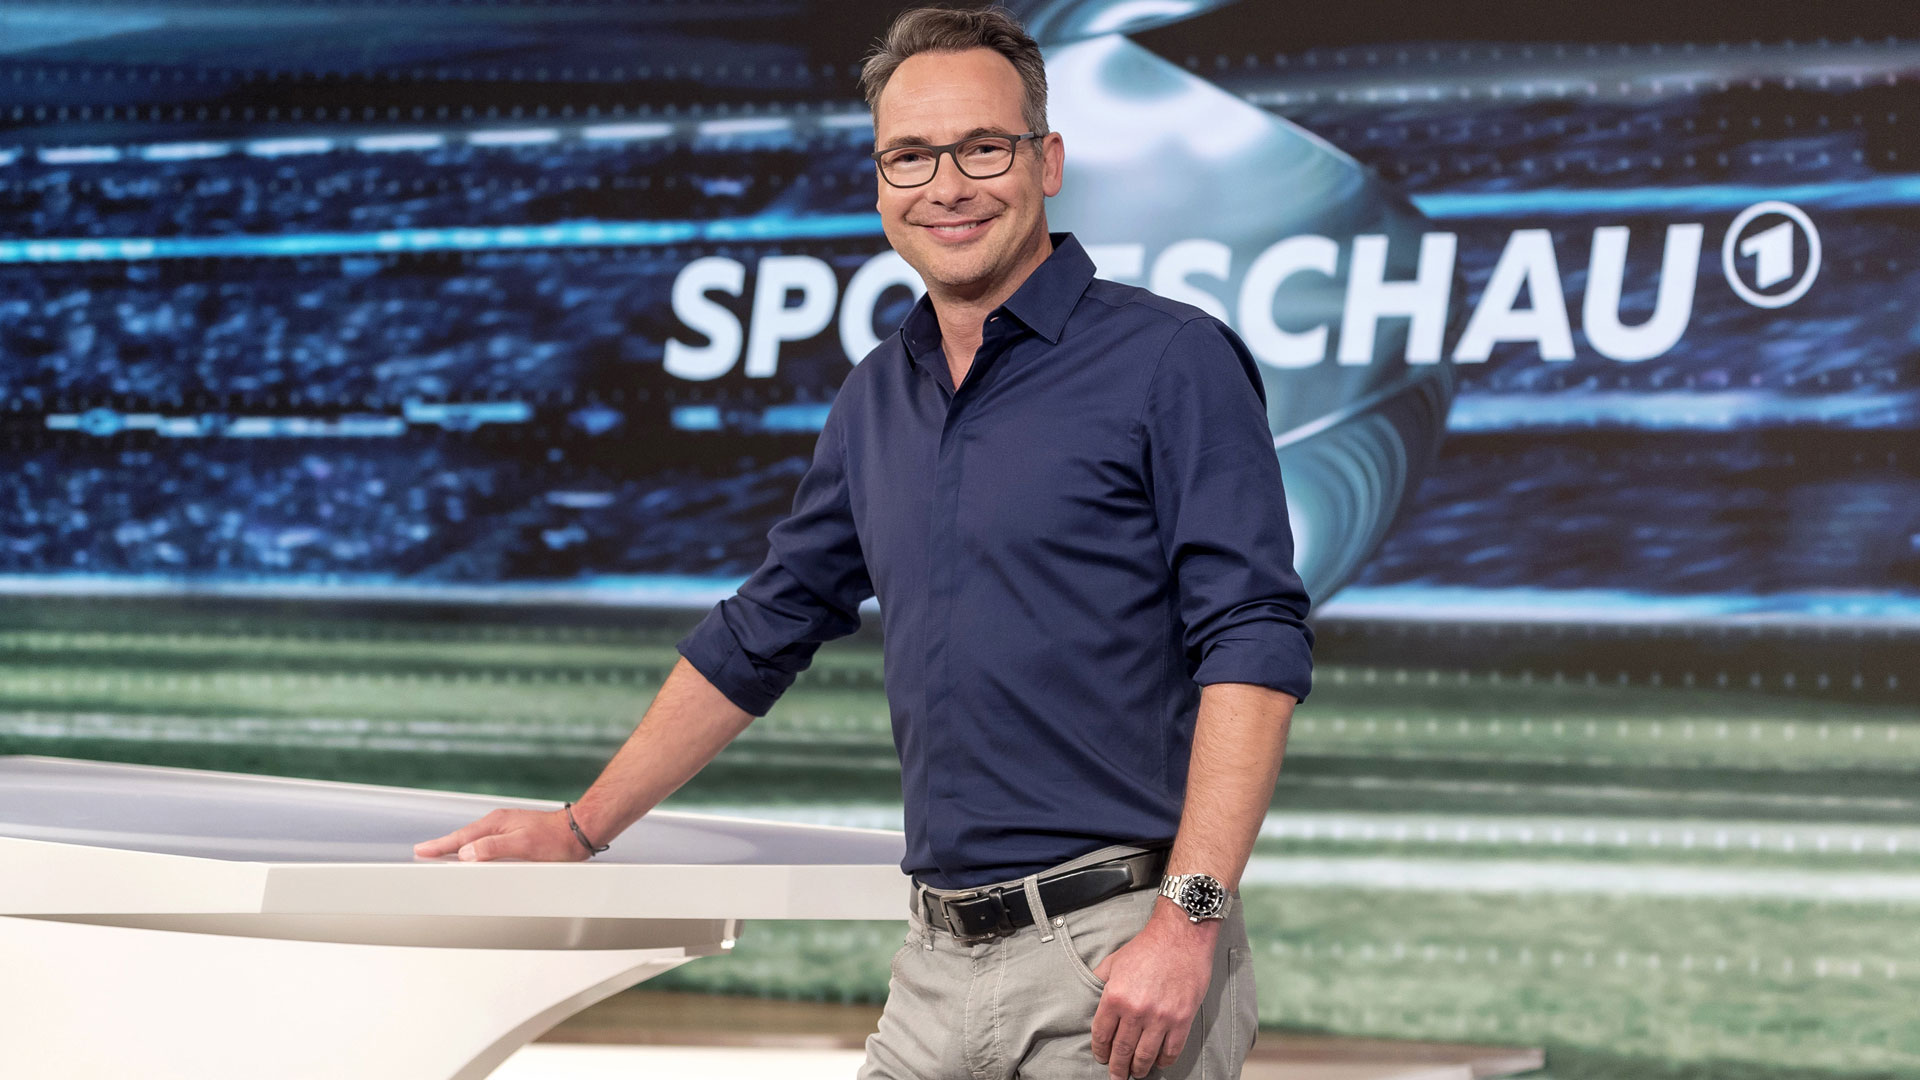 Sportschaumoderator Matthias Opdenhövel